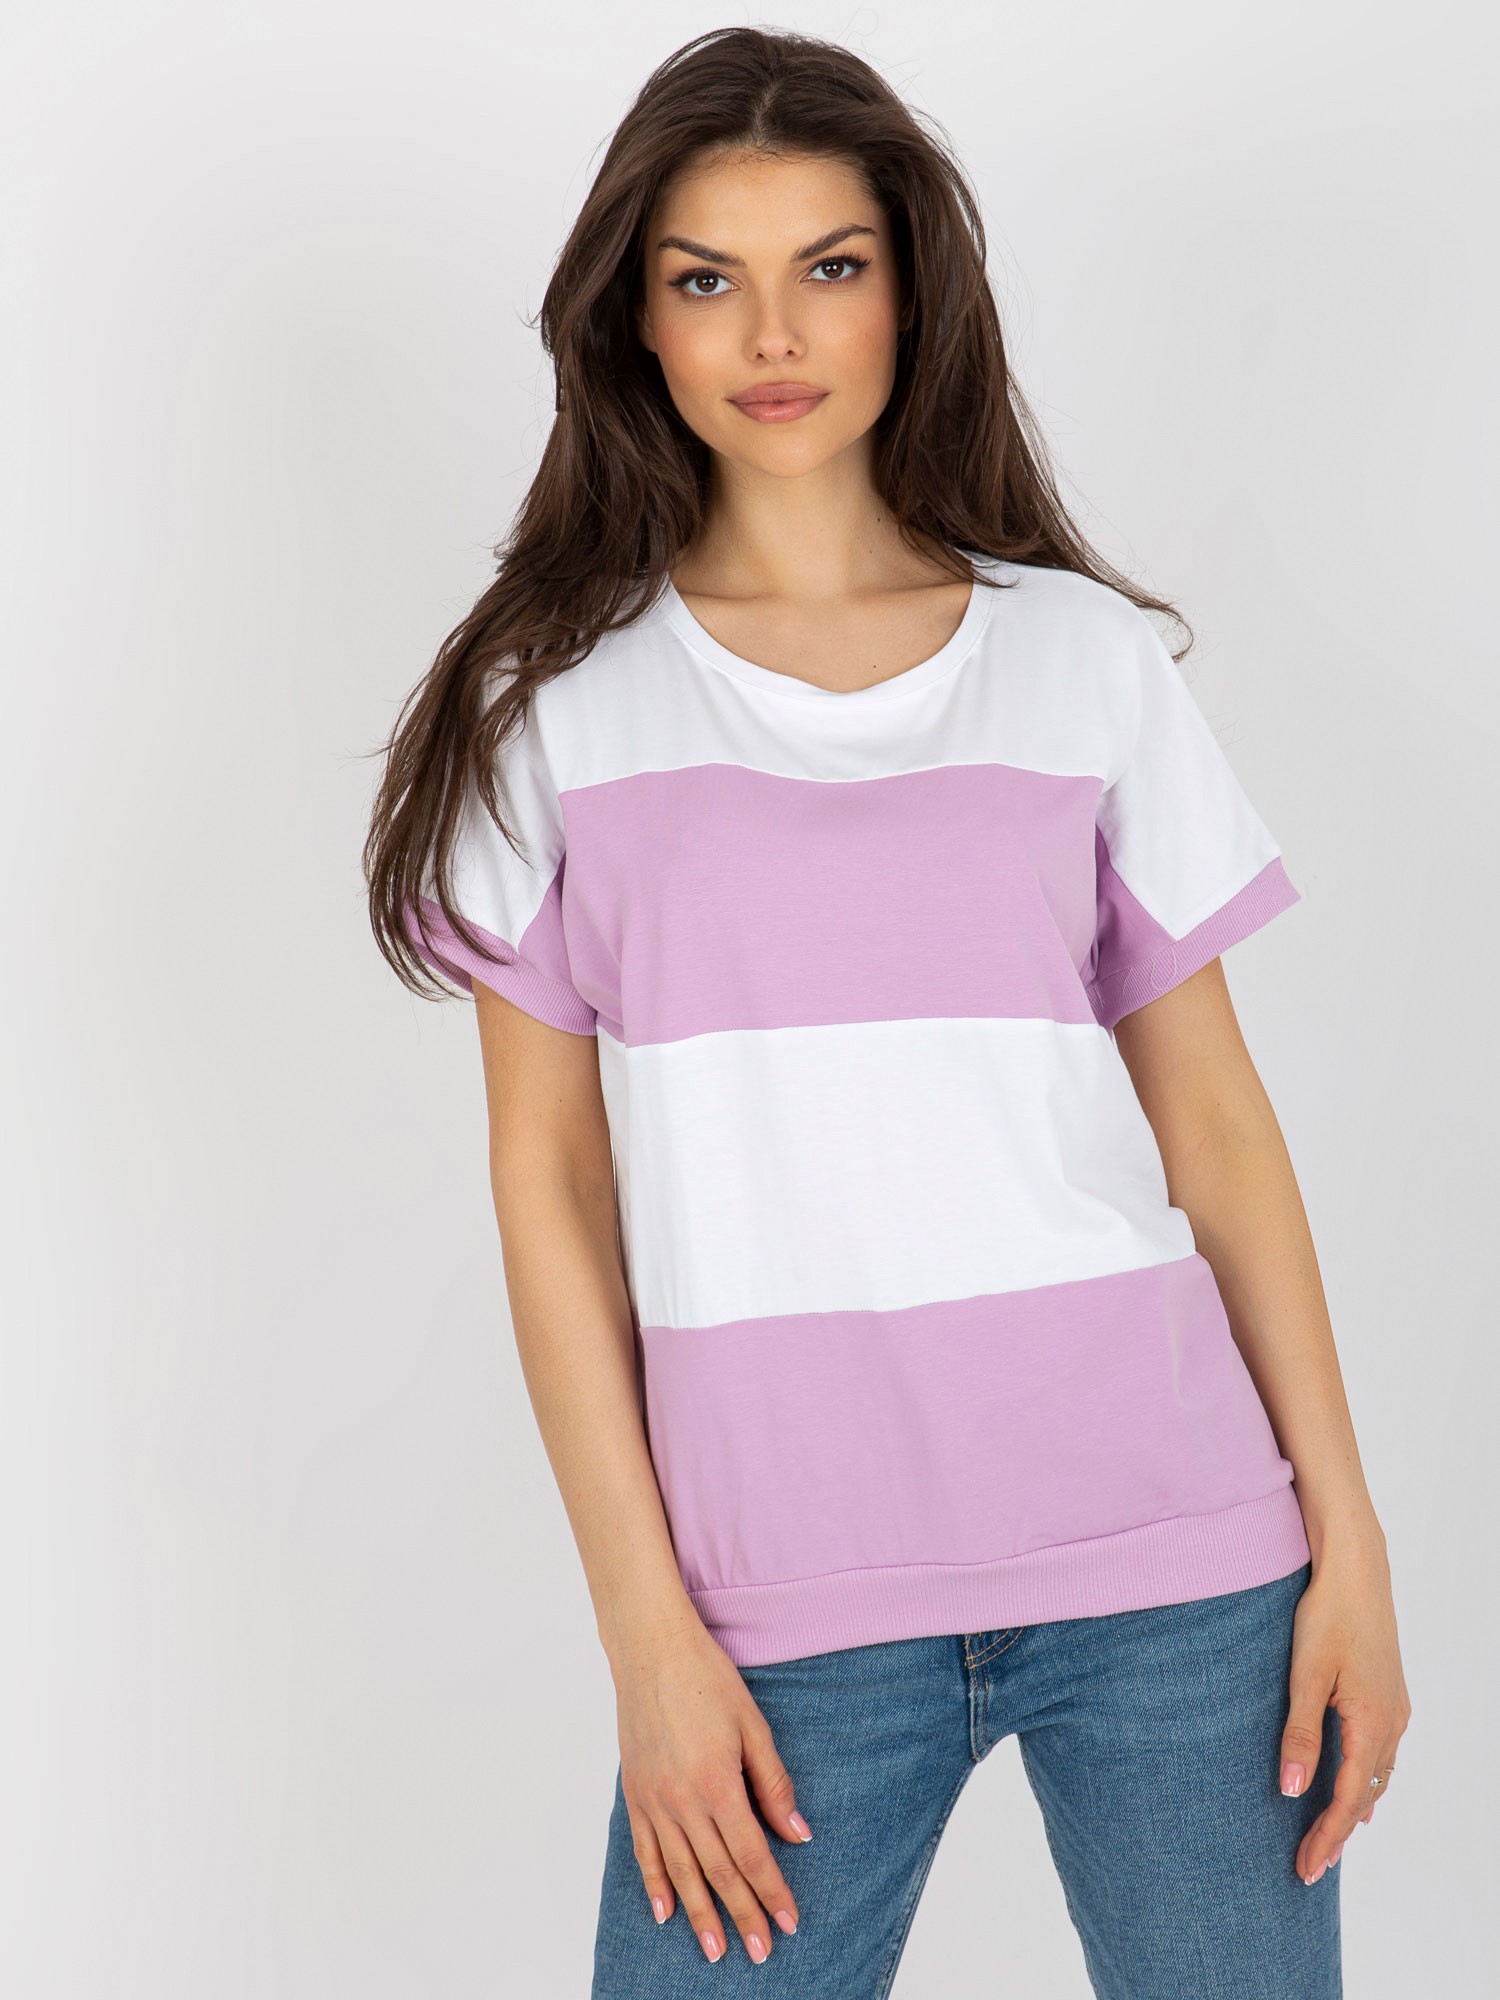 White and light purple basic cotton summer blouse